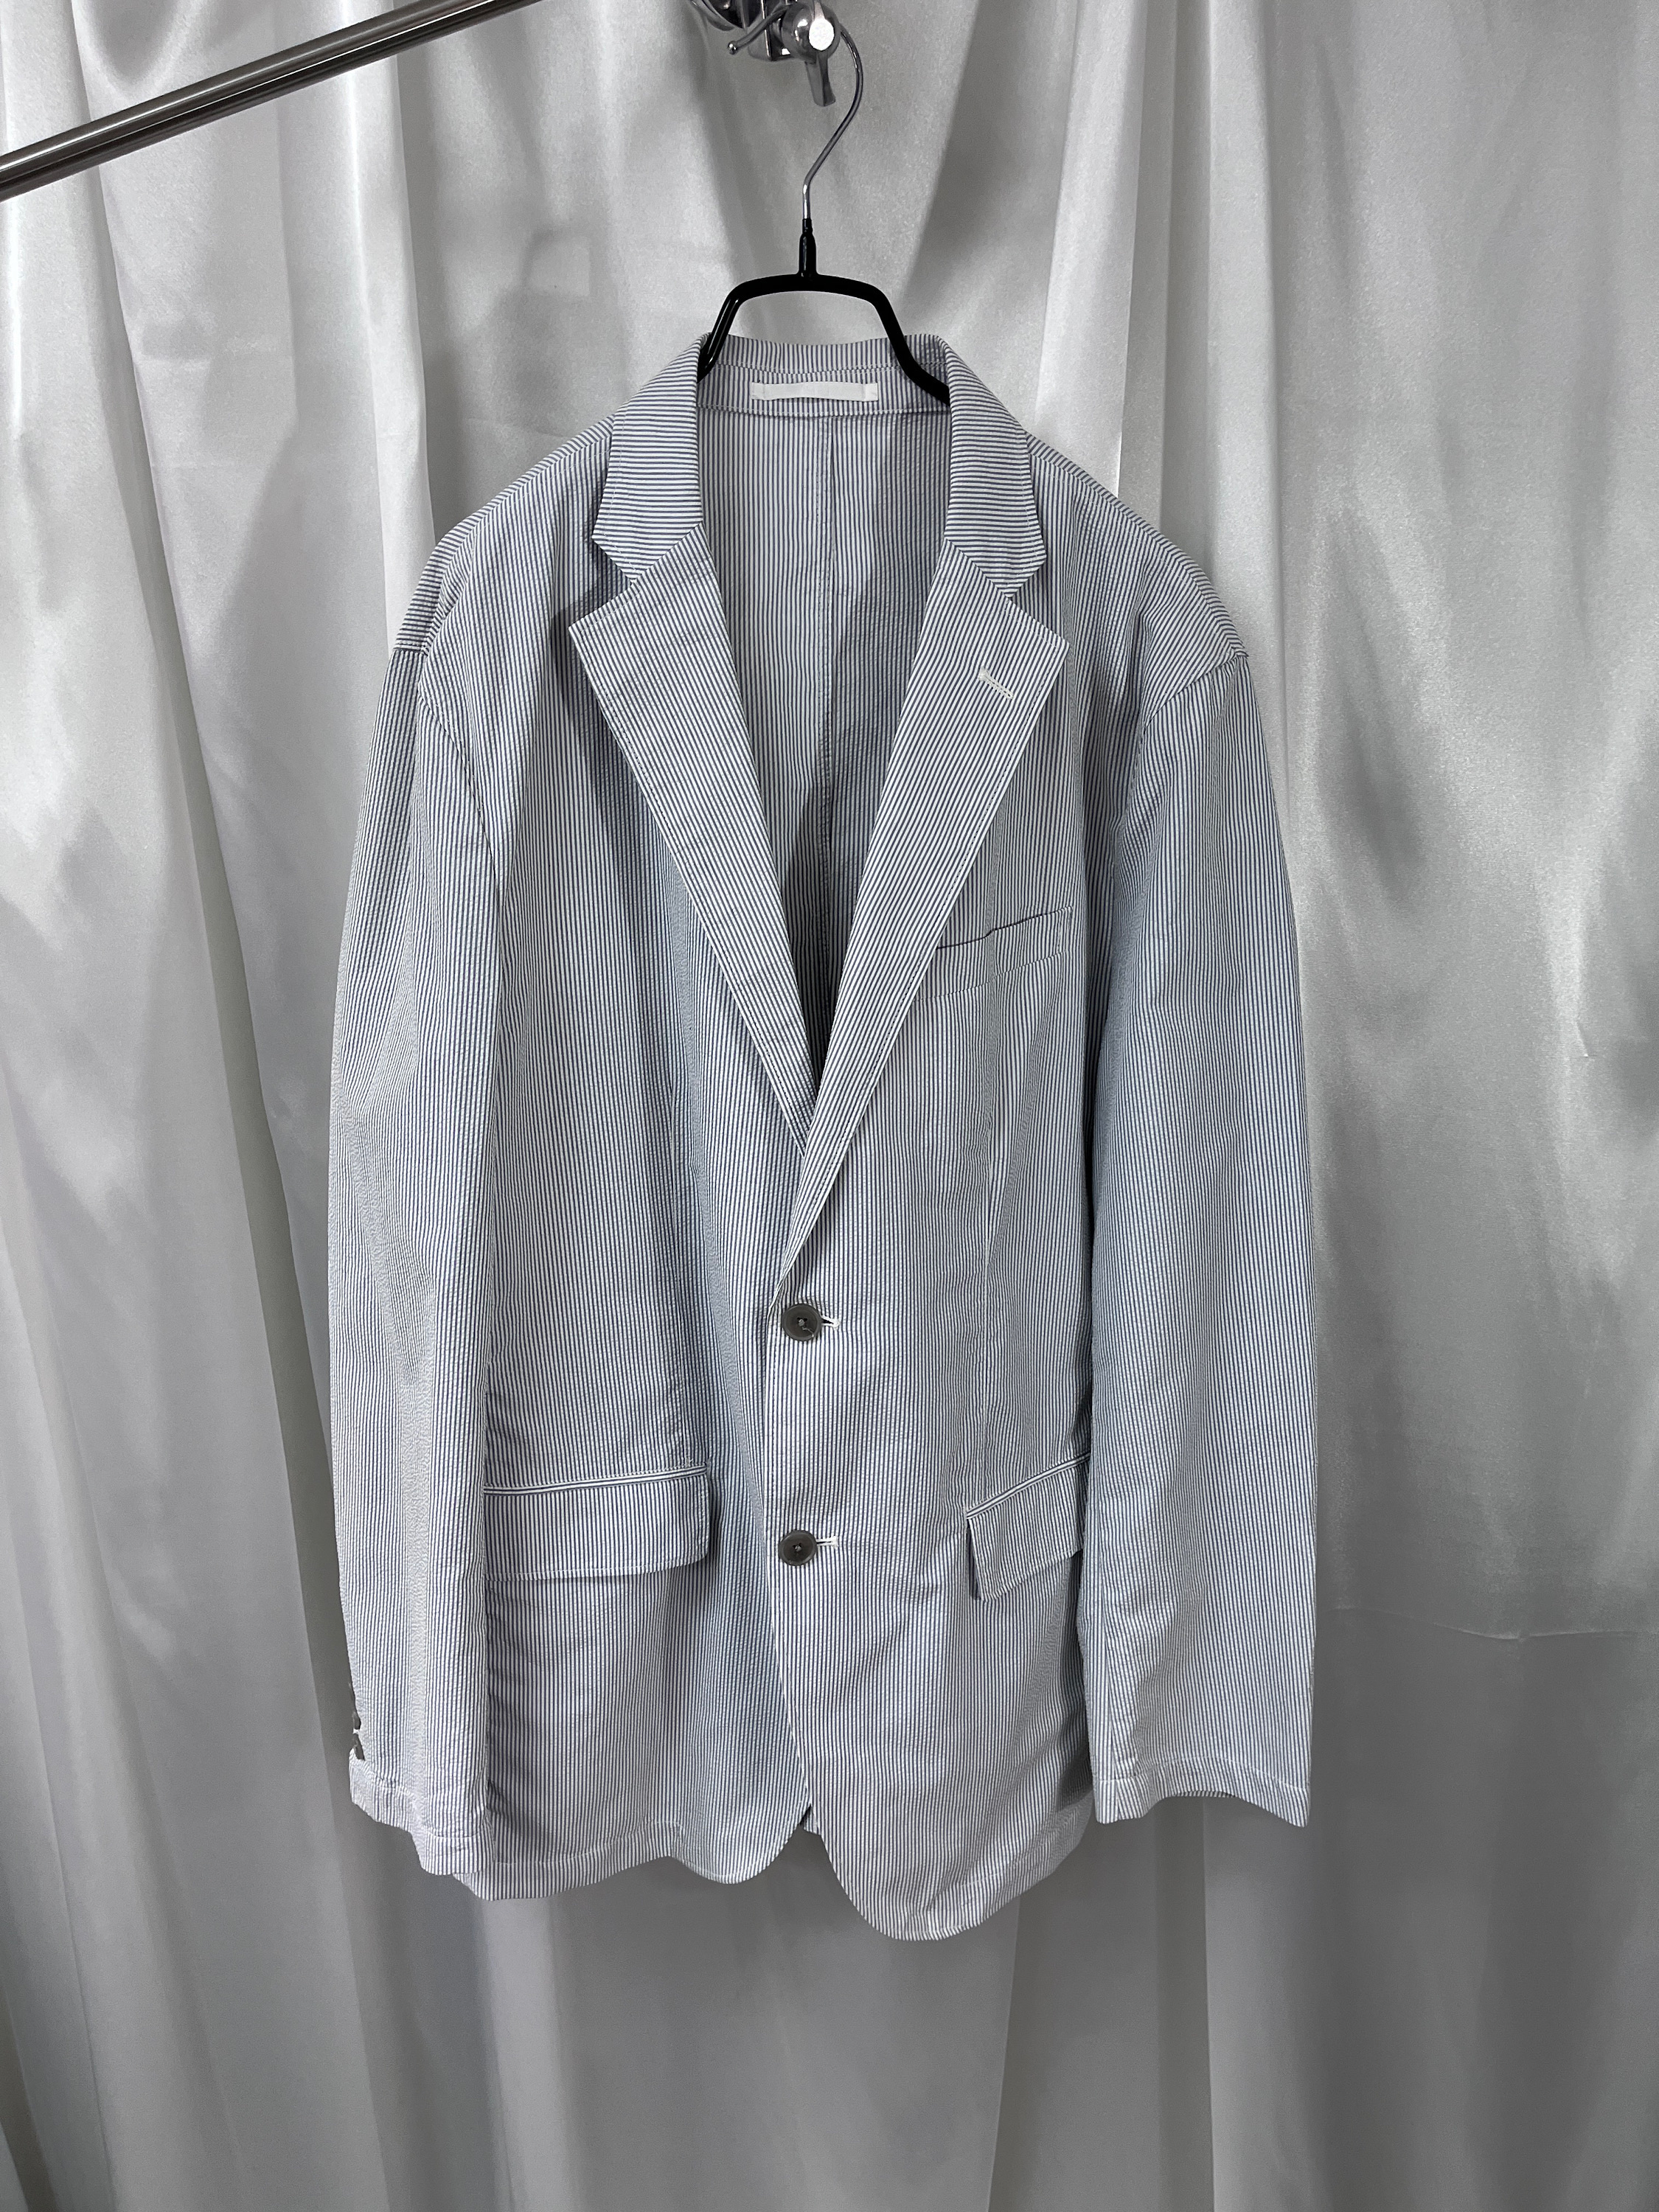 uniqlo jacket (XL)